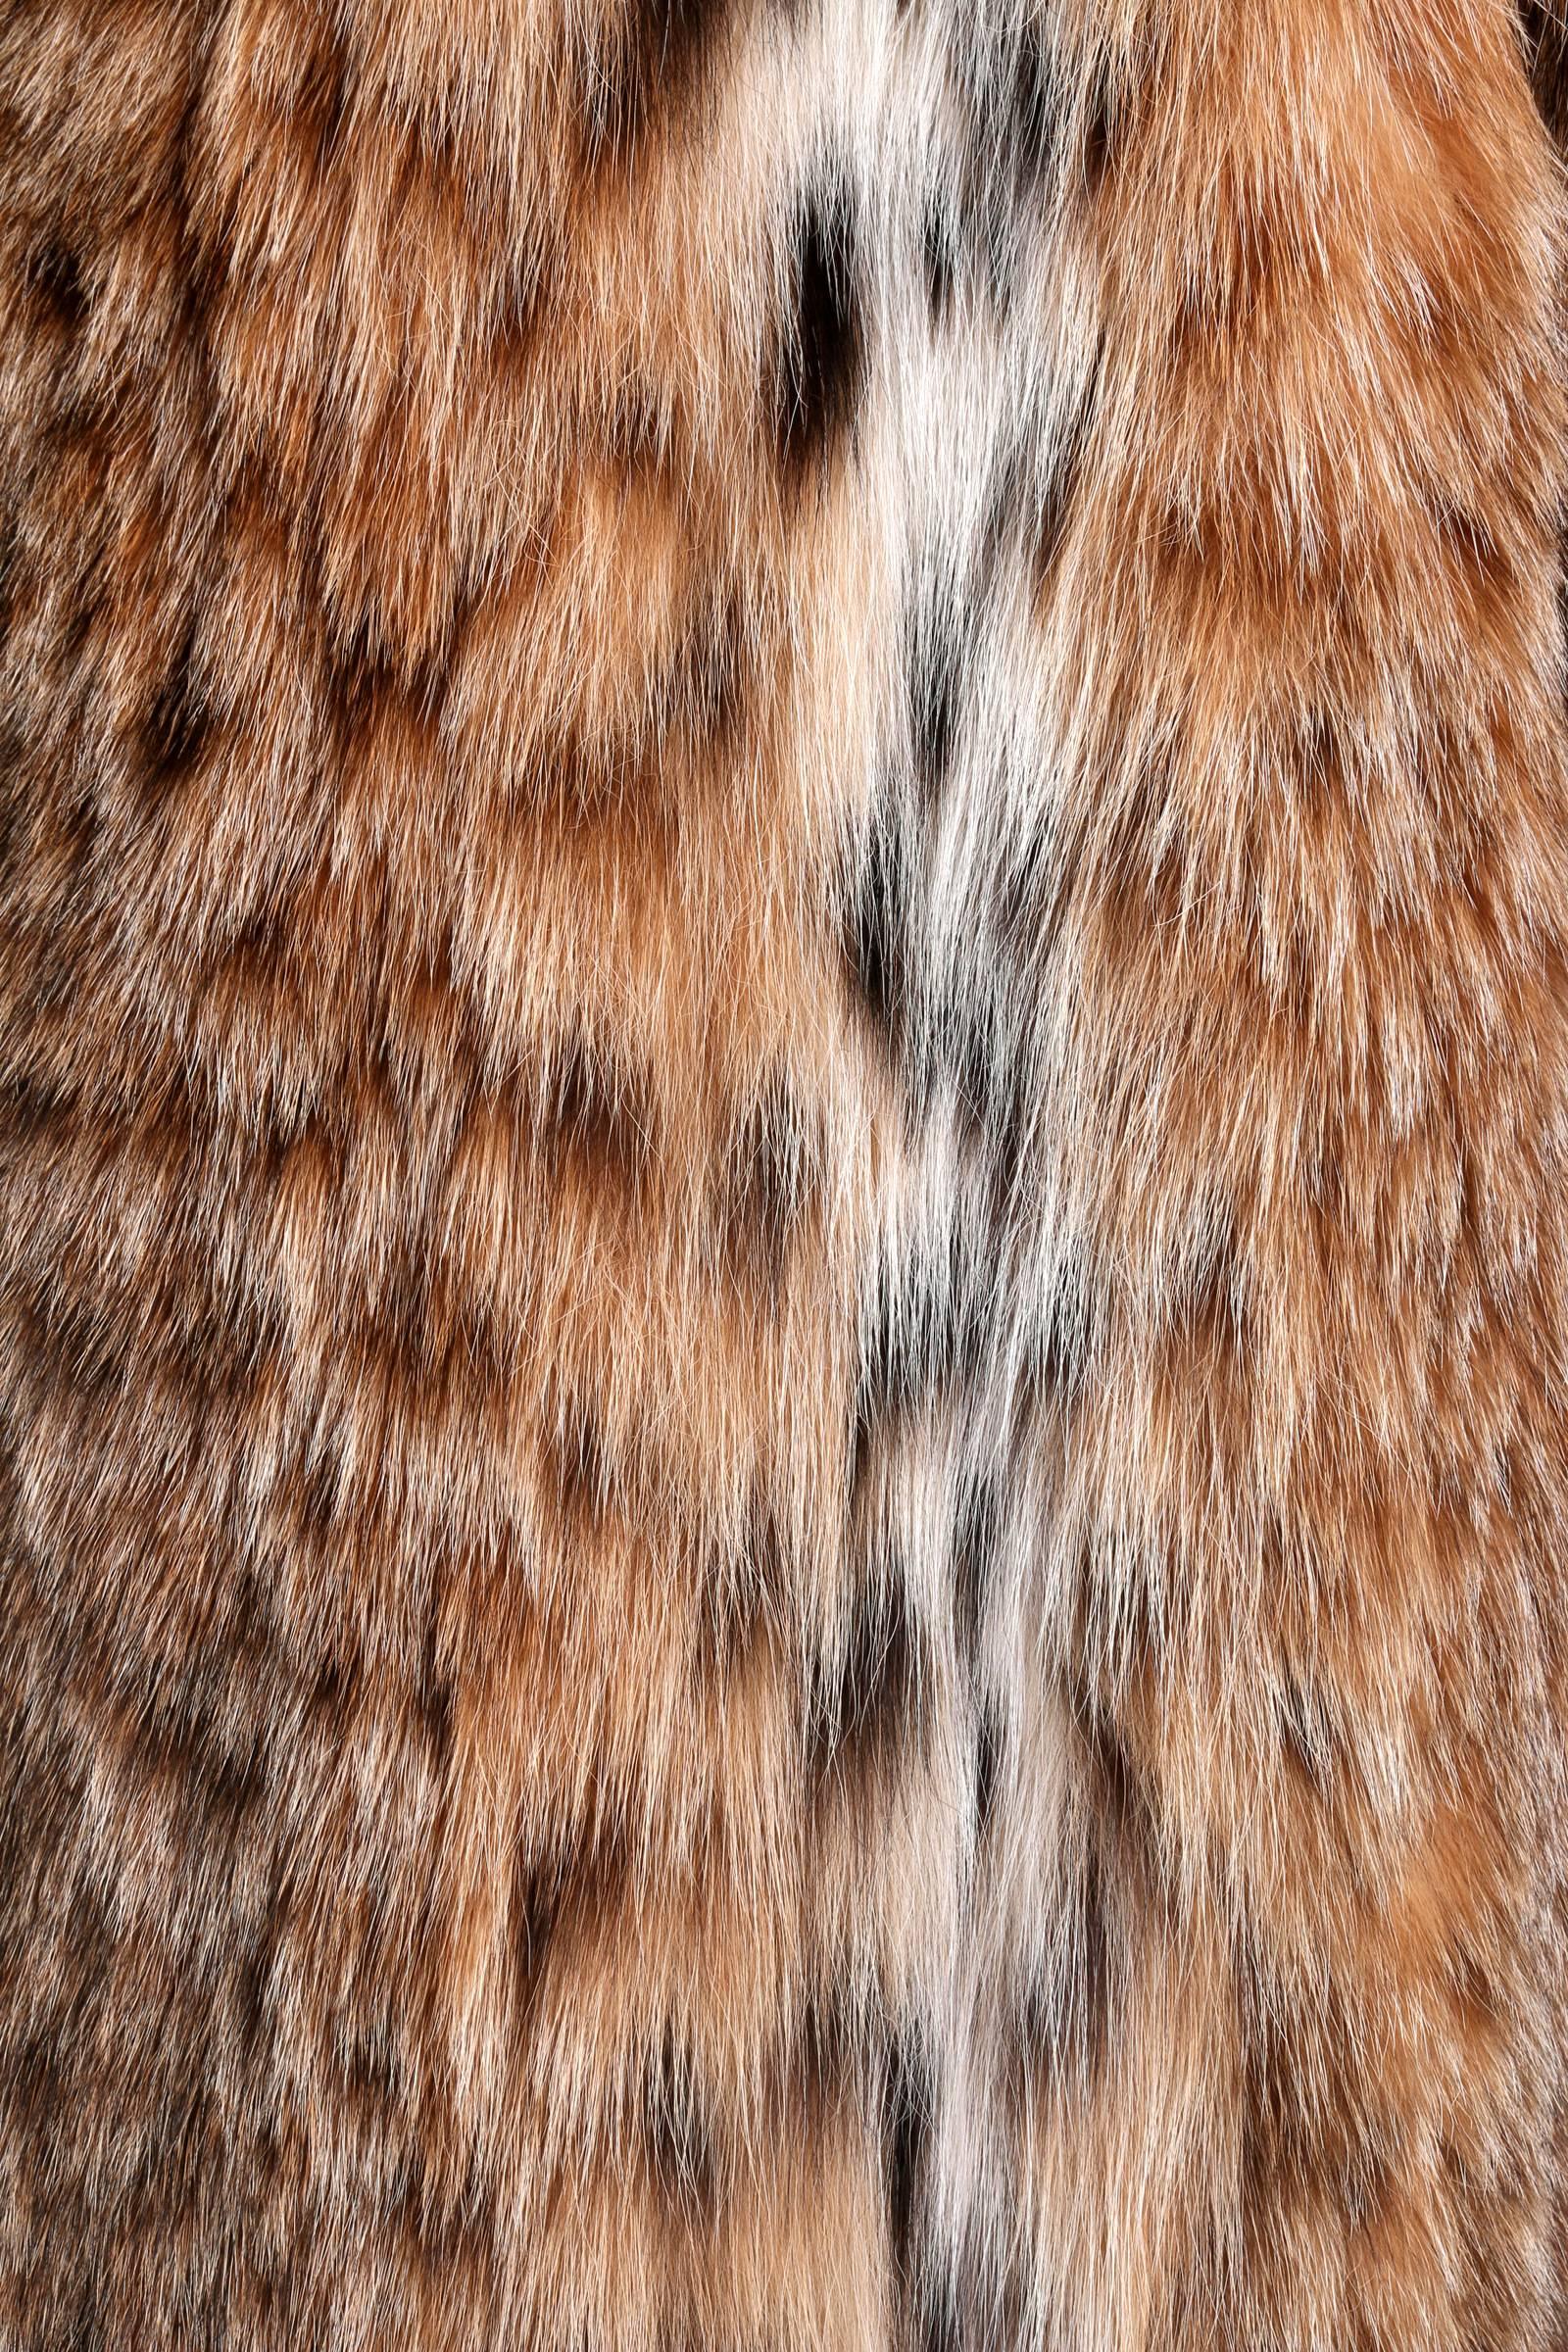 Women's GENUINE BOBCAT Spotted Fur Large Collar Statement Stroller Coat Jacket